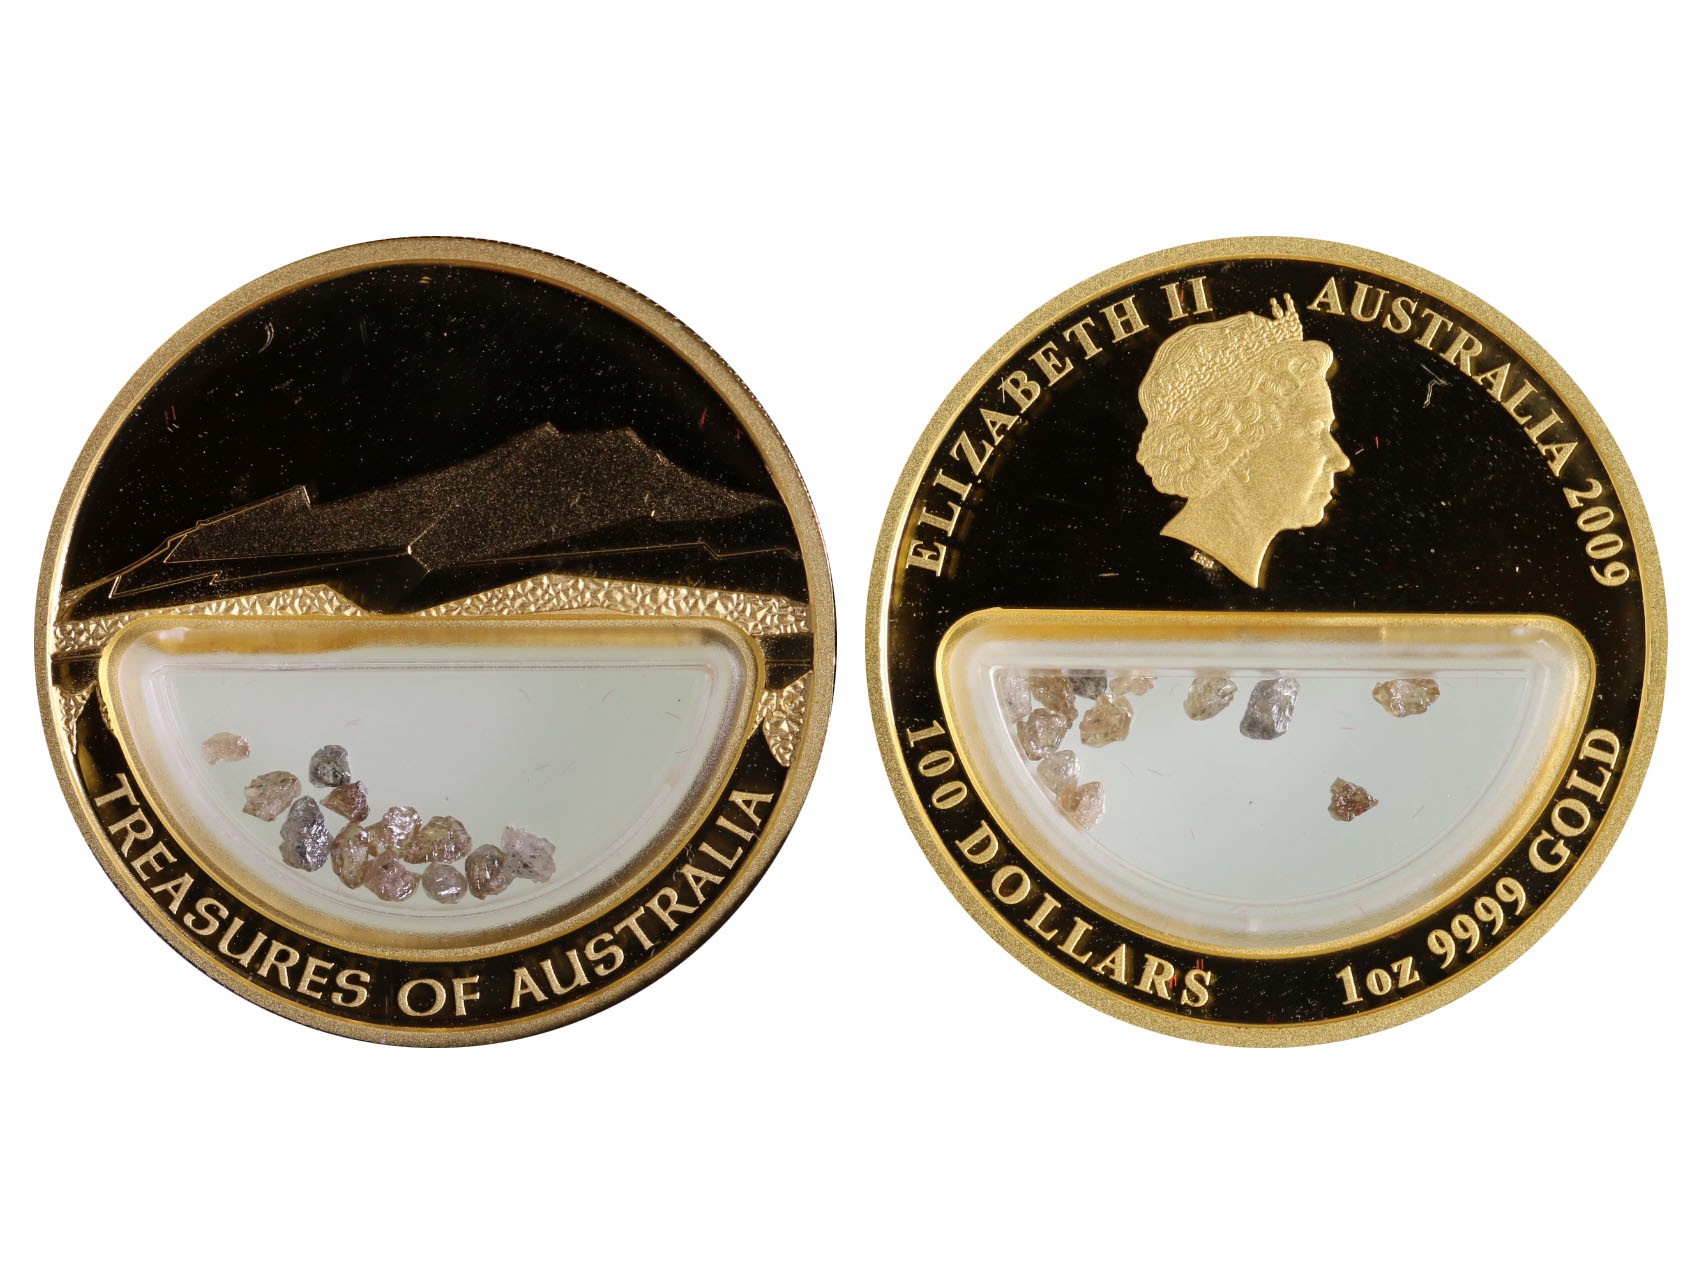 Austrálie - 100 Dollars 2009, s diamanty, 31.107g, Au 999.9/1000, 36.1mm, náklad 1000 ks., certifikát, etue